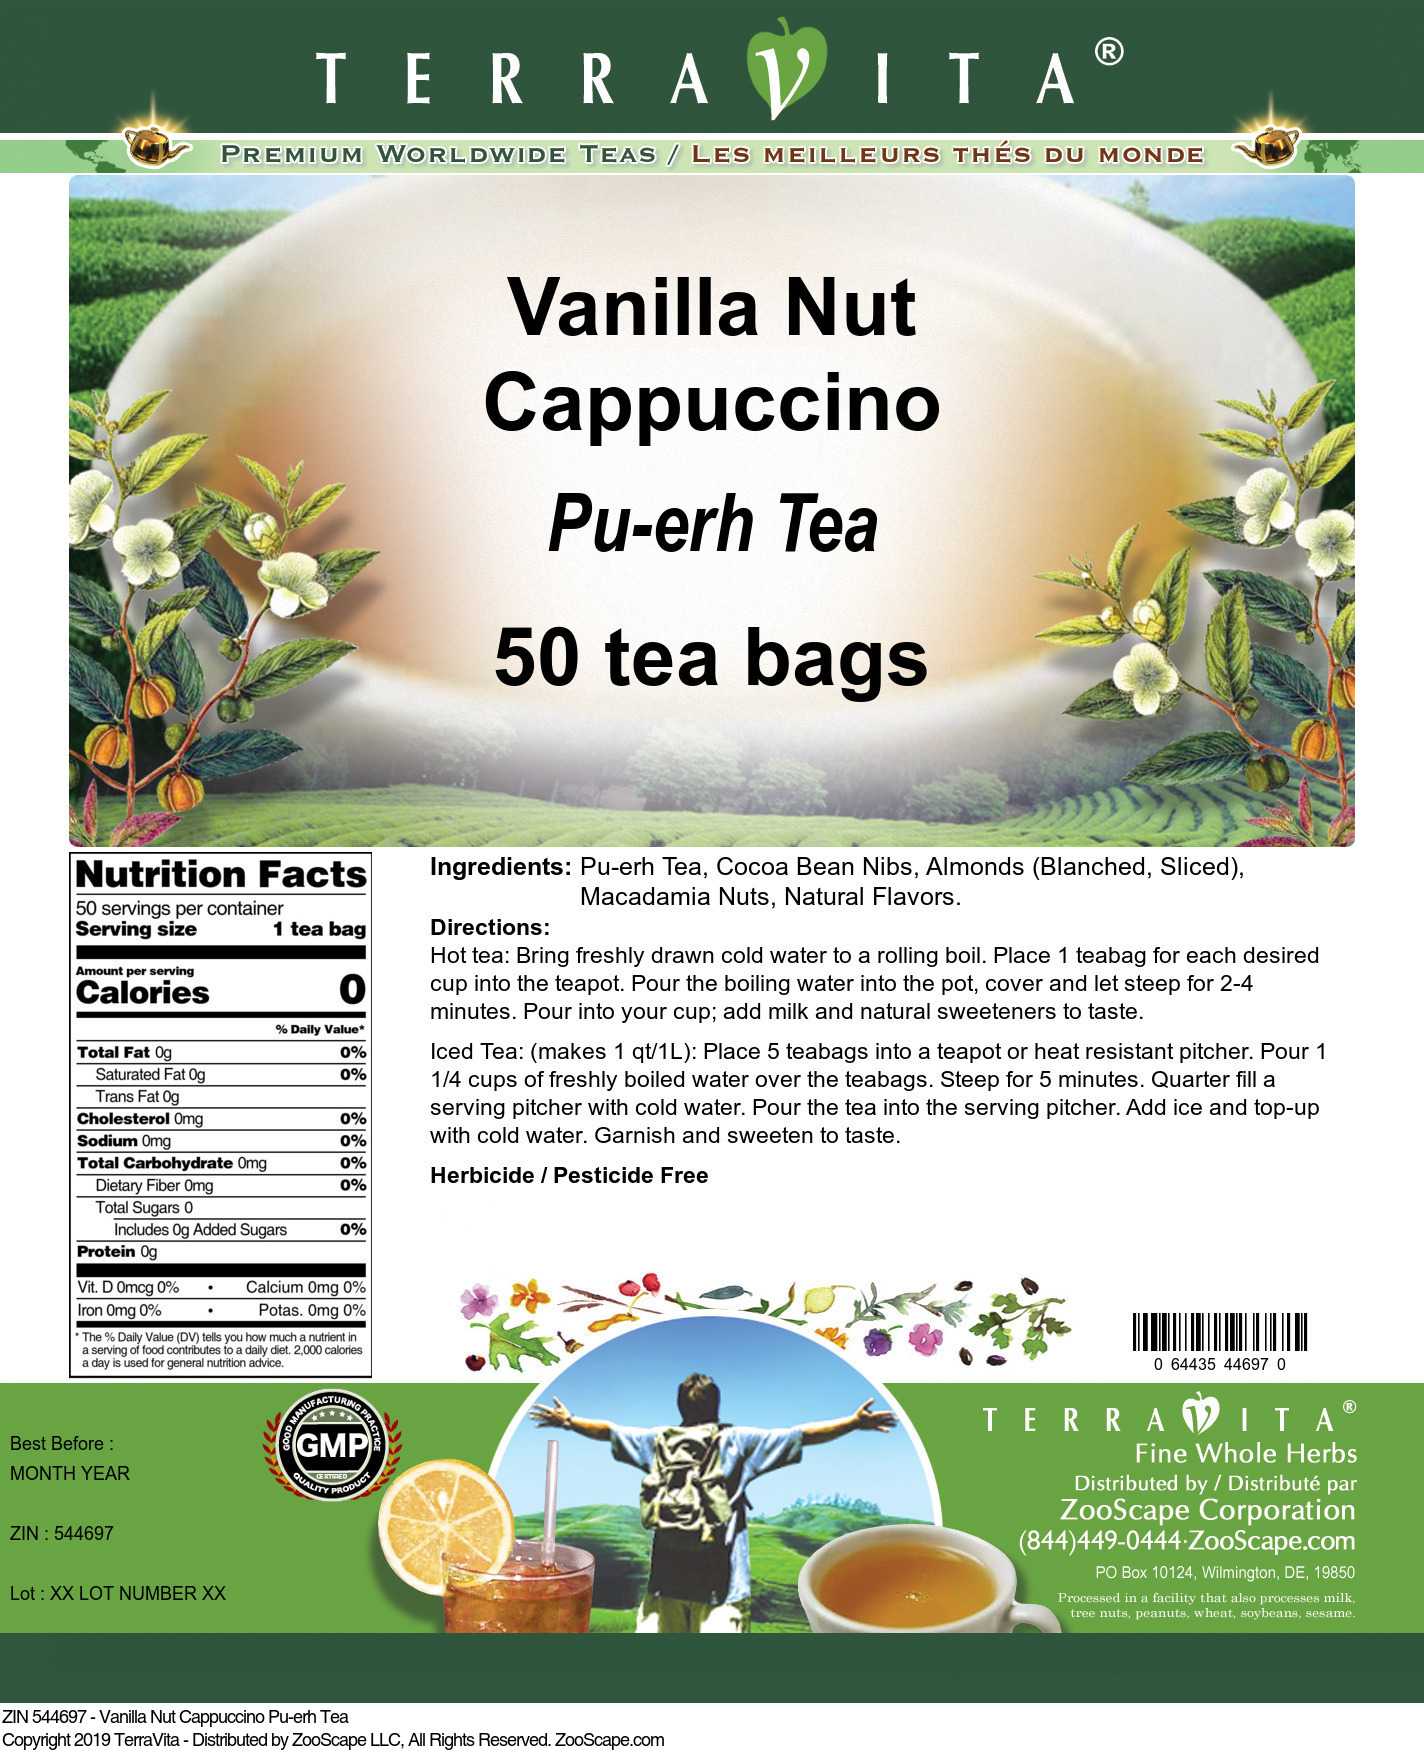 Vanilla Nut Cappuccino Pu-erh Tea - Label